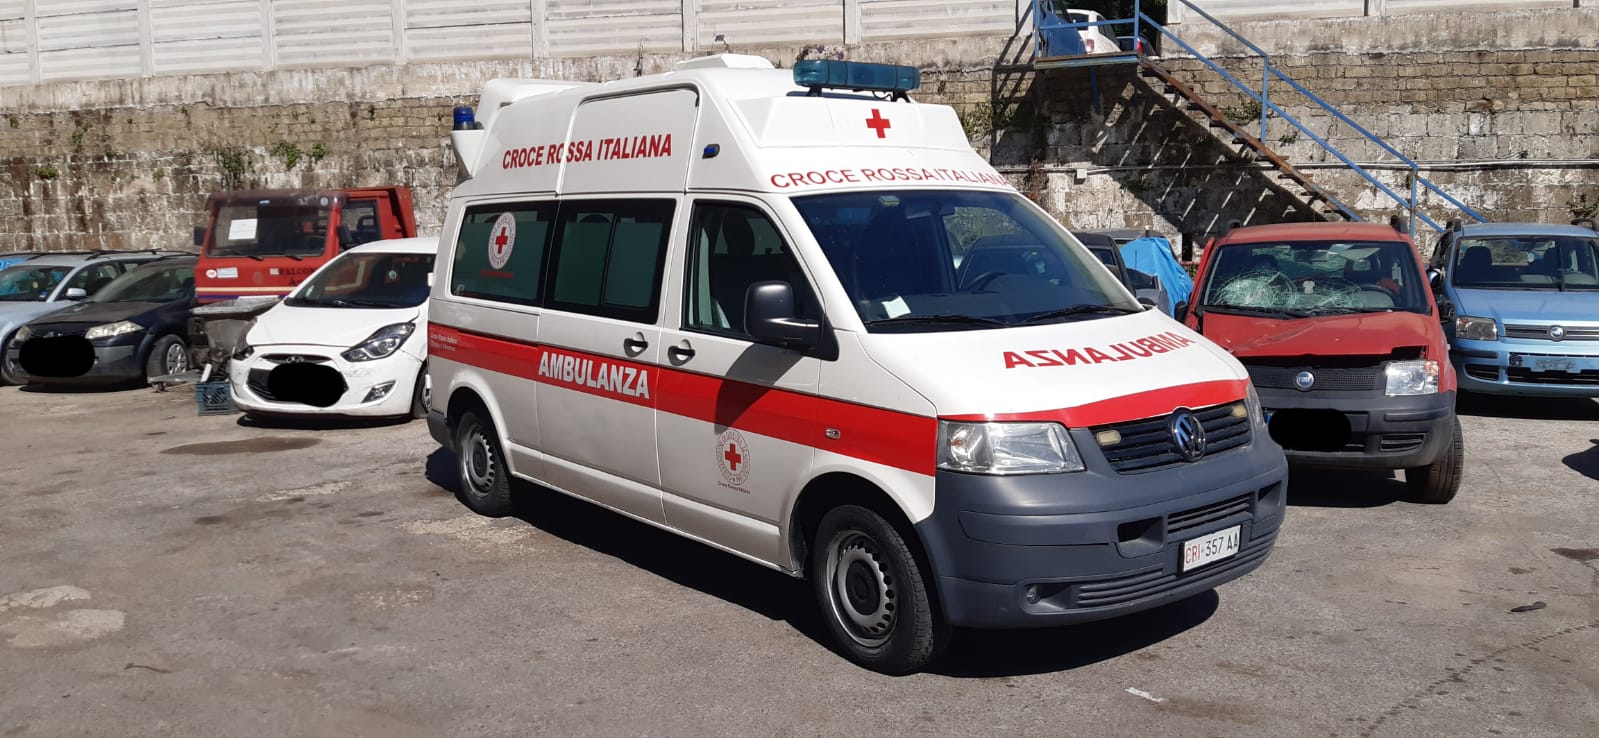 Valmontone Ambulanza rubata